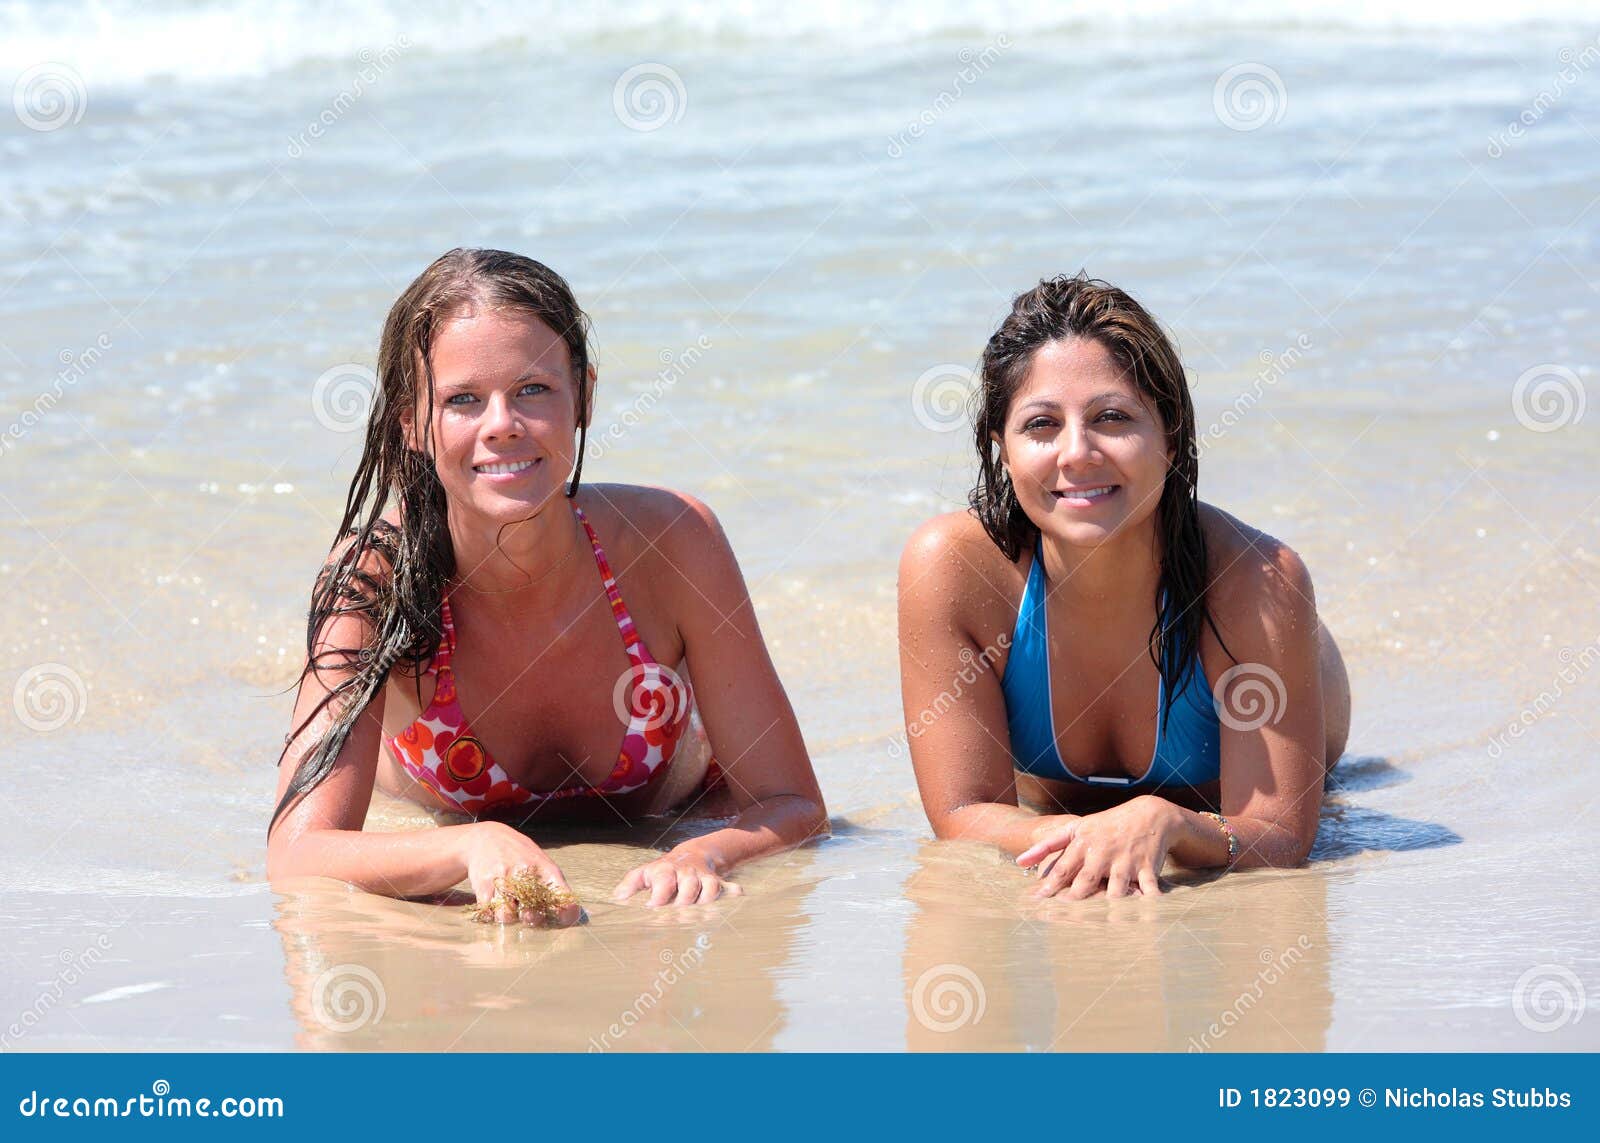 beach girls voyeur pussy